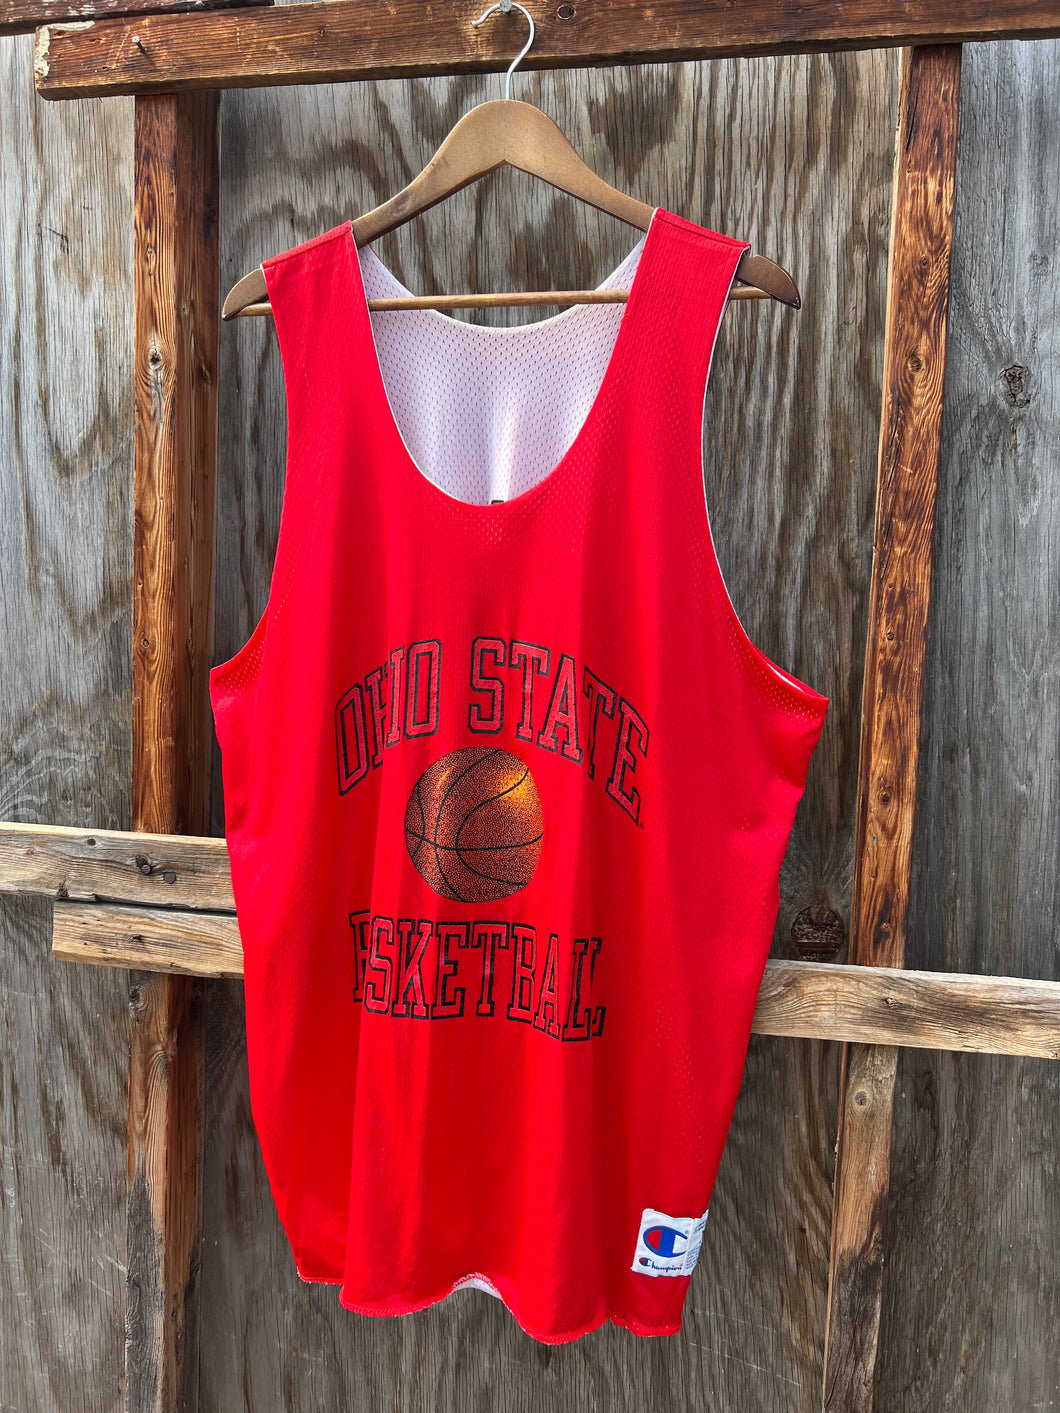 Vintage Champion Ohio State Basketball Reversible Jersey (XL)